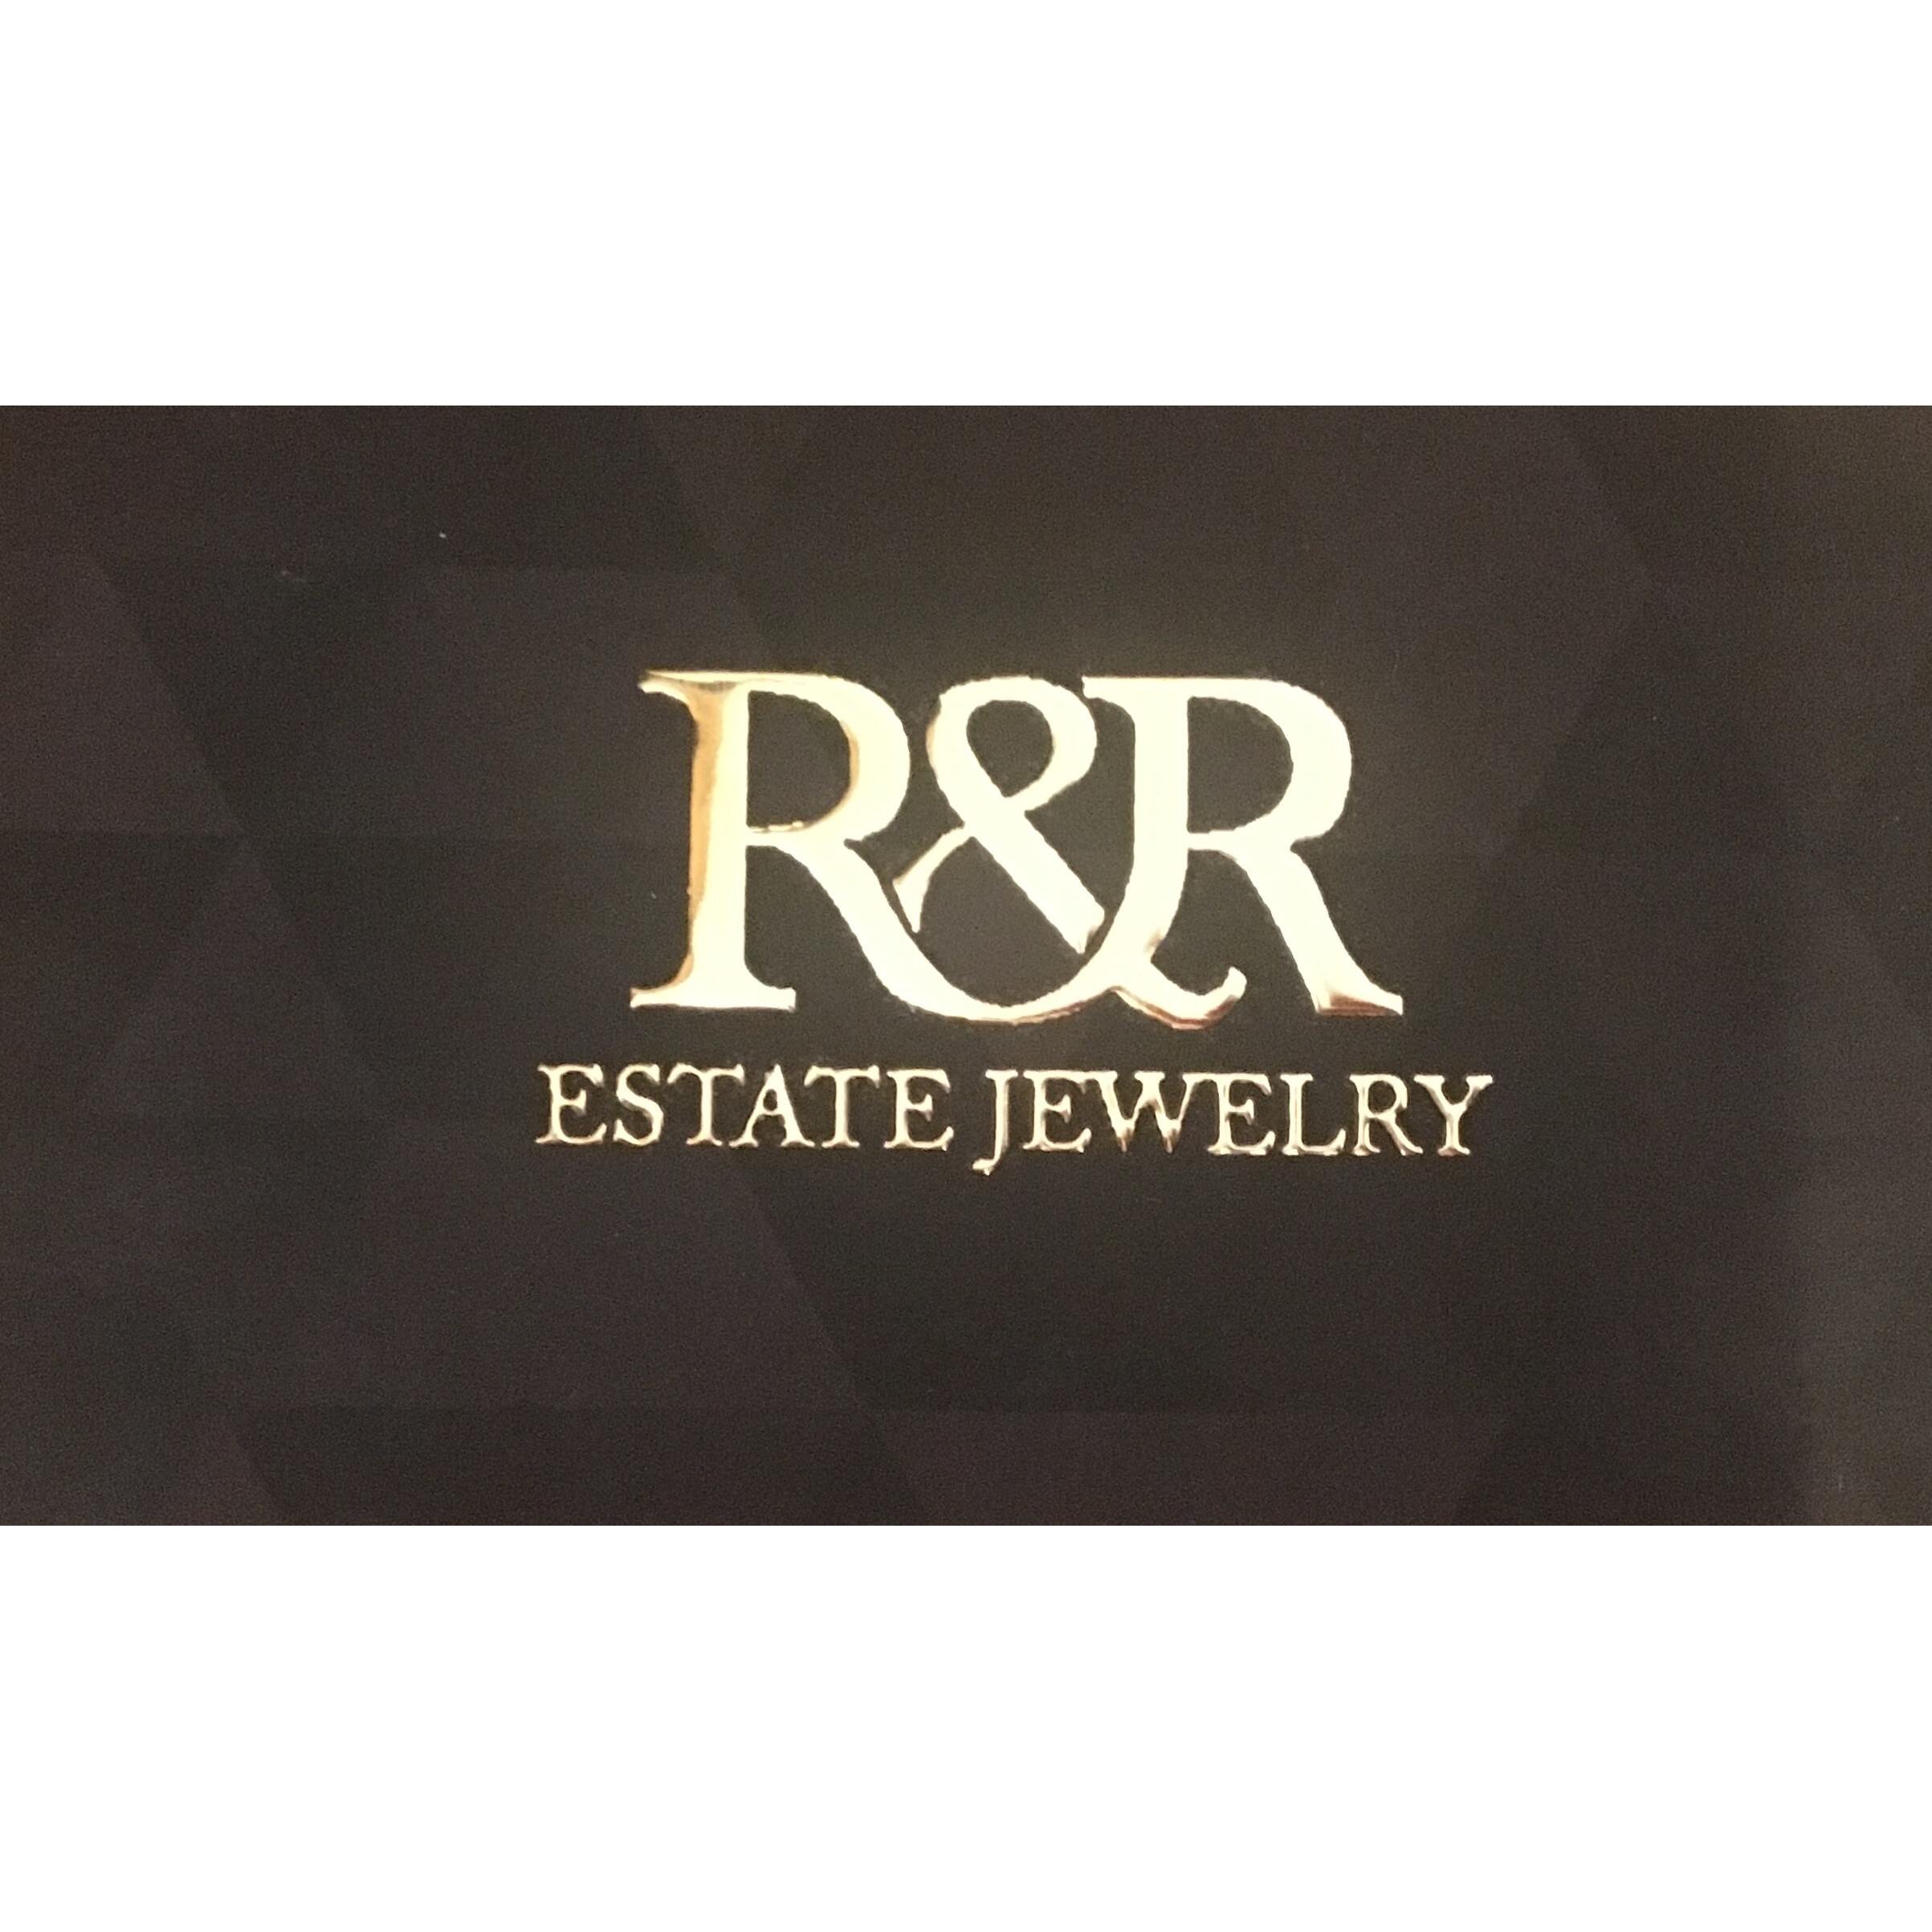 R & R Estate Jewelry - Birmingham, MI 48009 - (248)723-4653 | ShowMeLocal.com